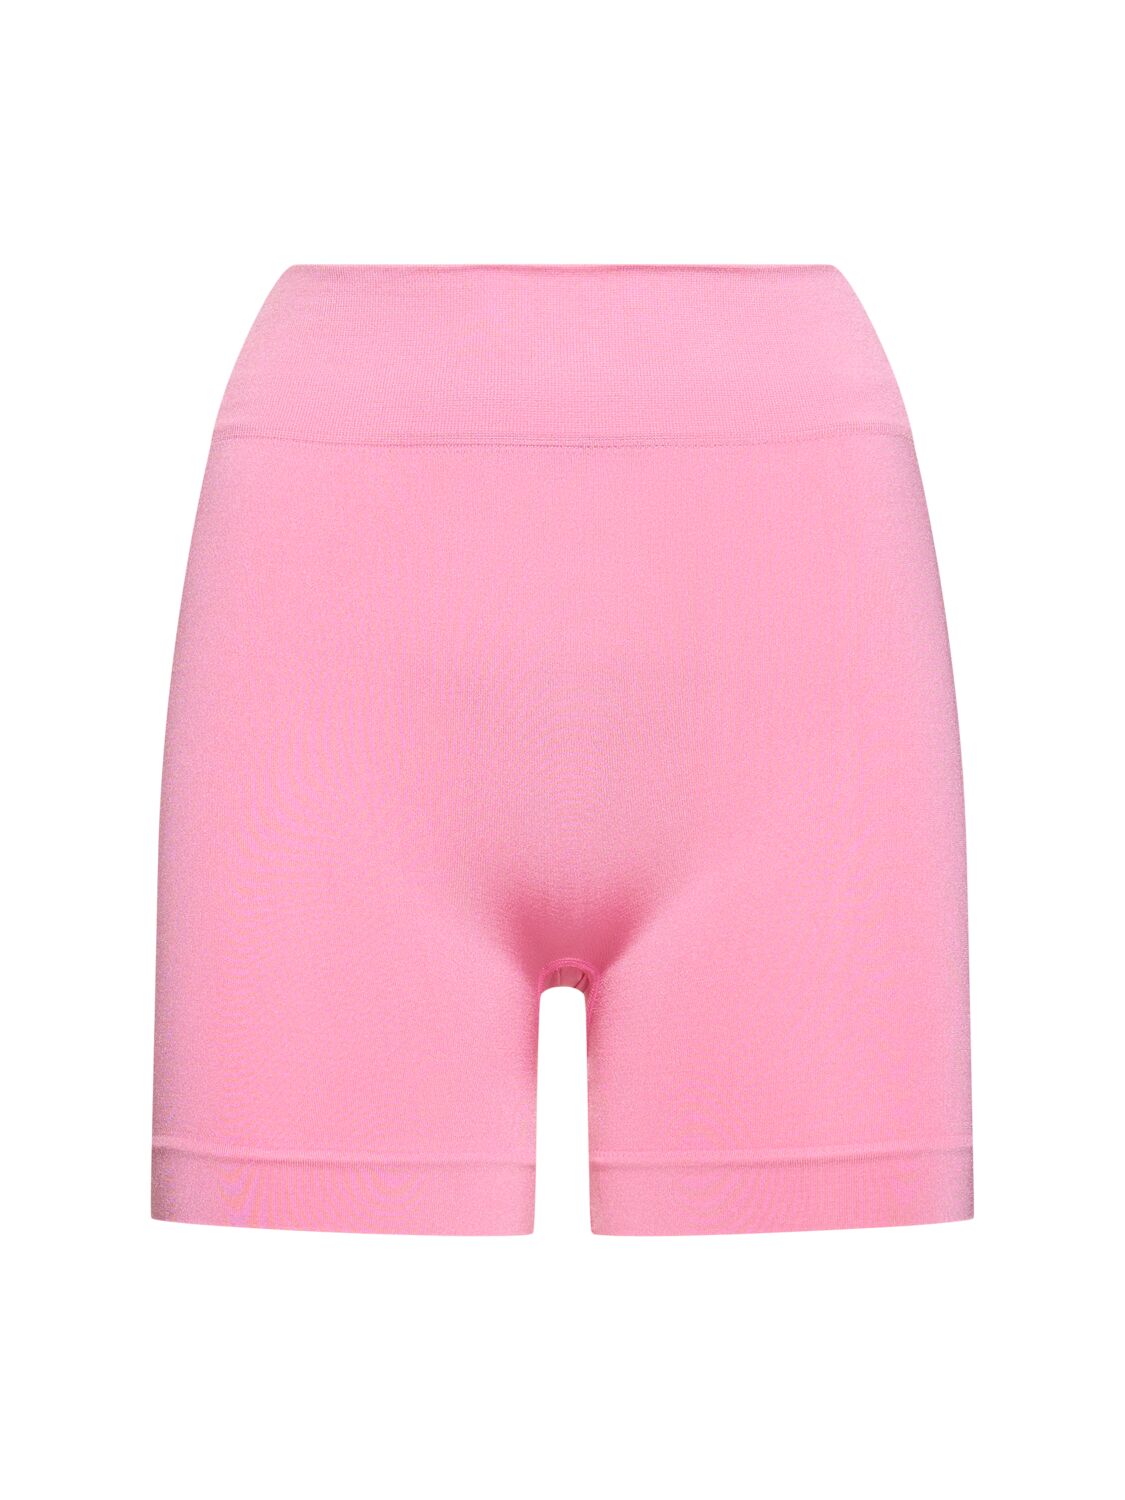 Prism Squared Composed Biker Shorts In Pink